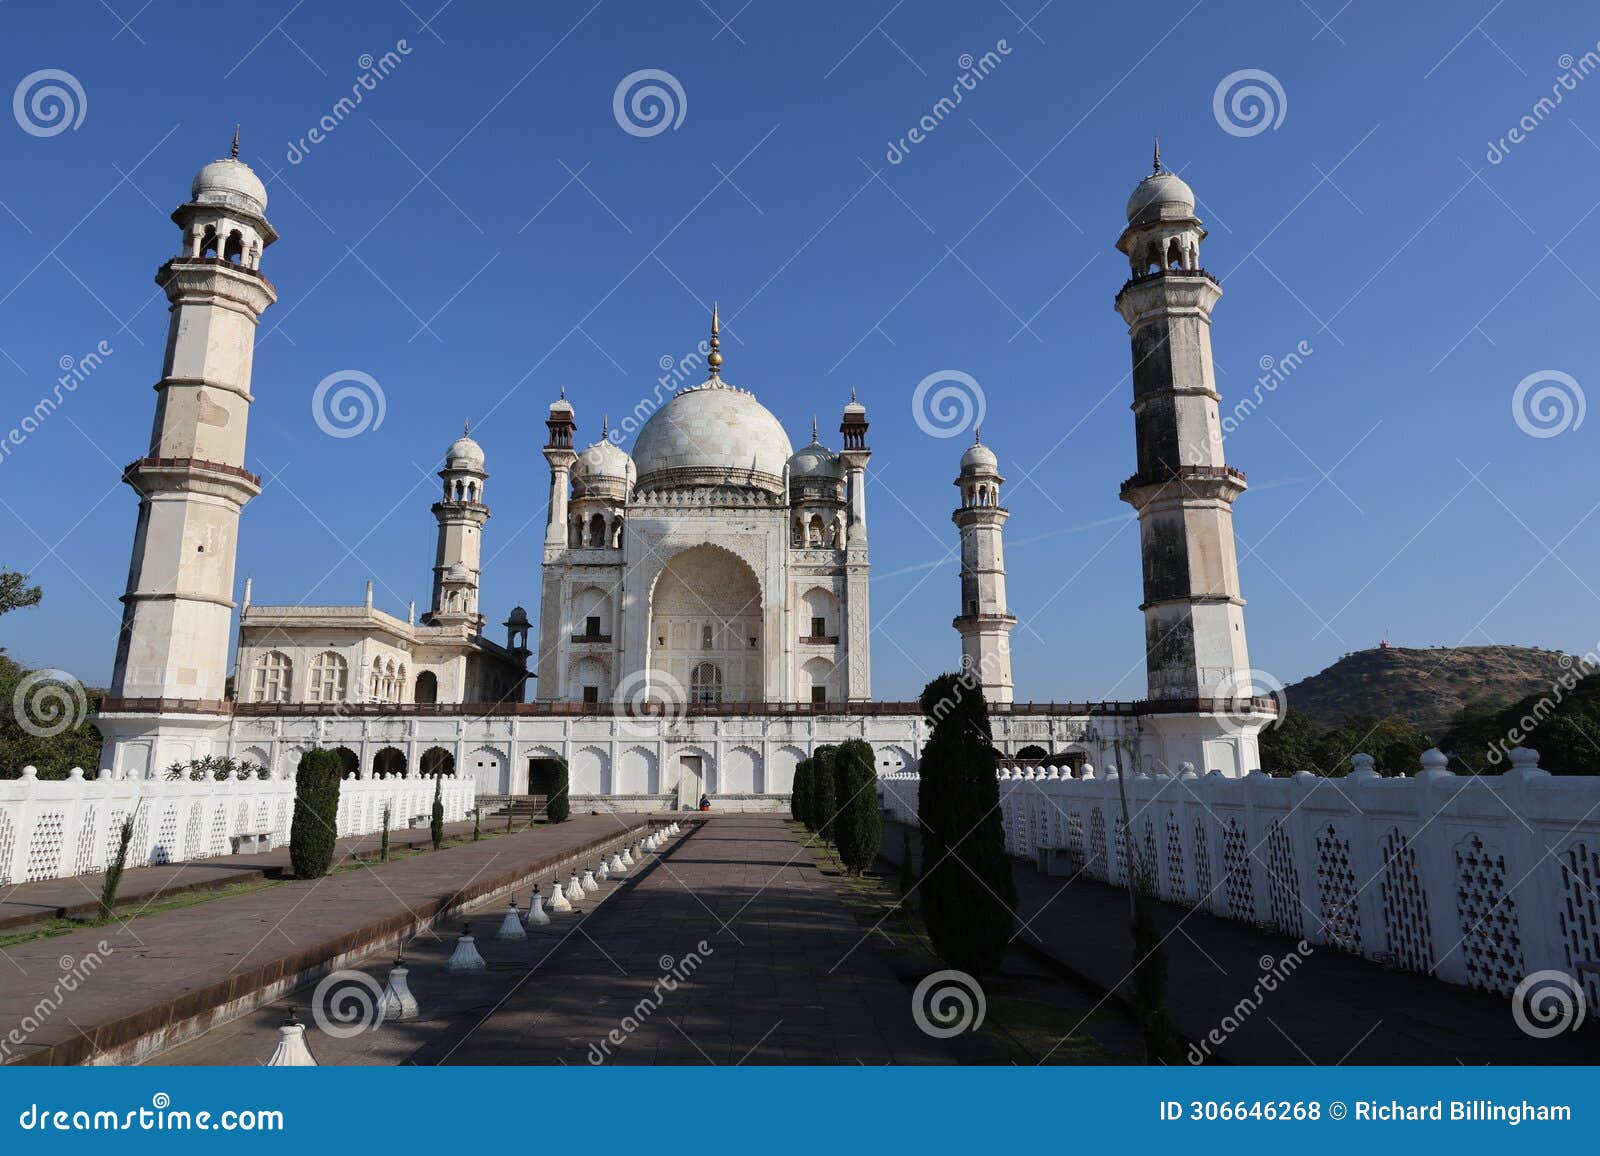 bini-ka maqbaba mausoleum, aurangabad, maharashtra, india